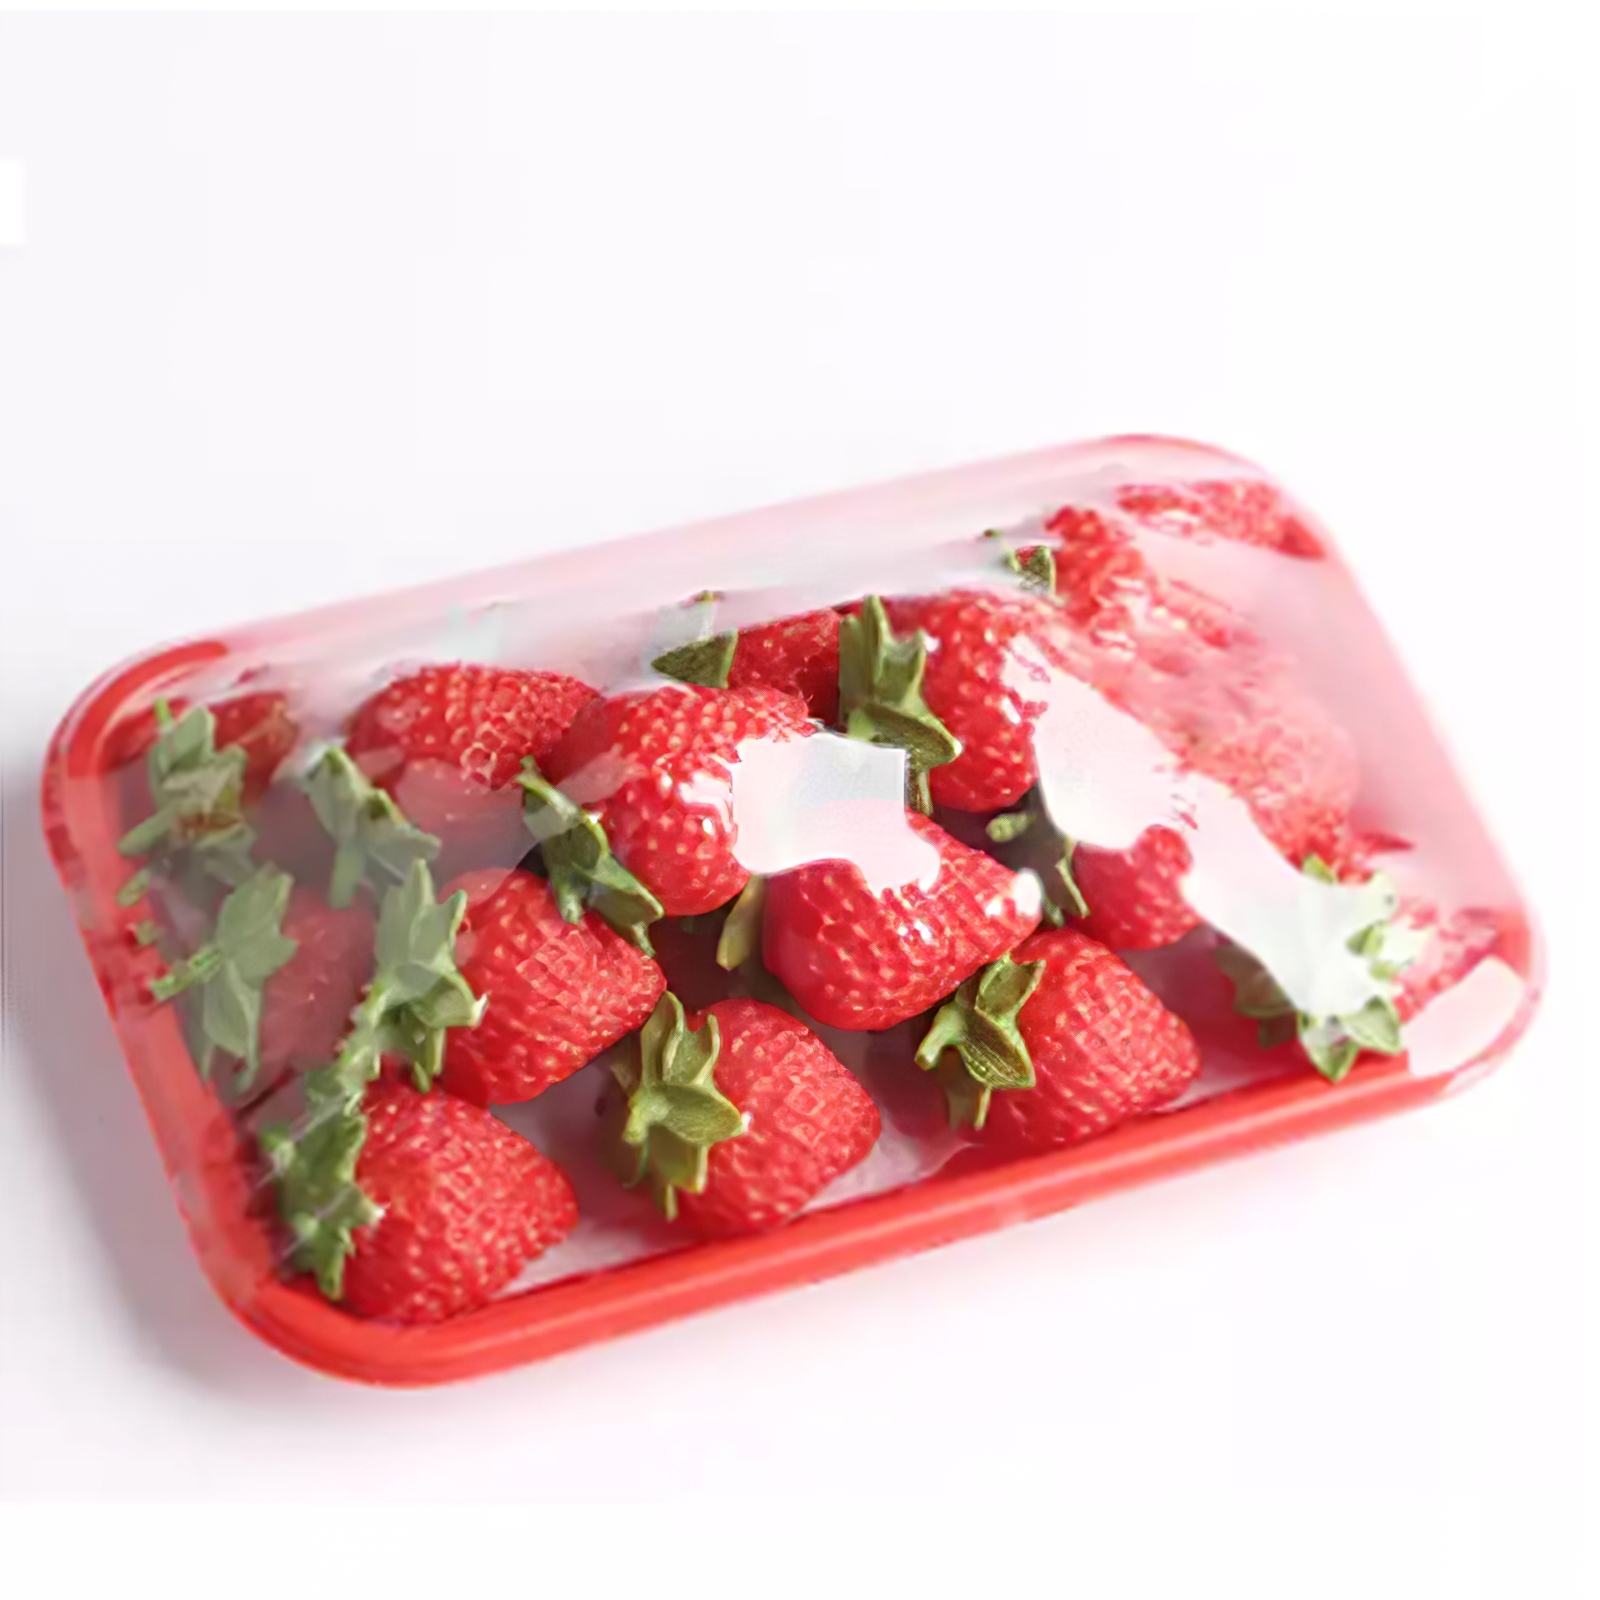 Ambalare cu capsuni Blister Container transparent din plastic Cutie cu fructe biodegradabile